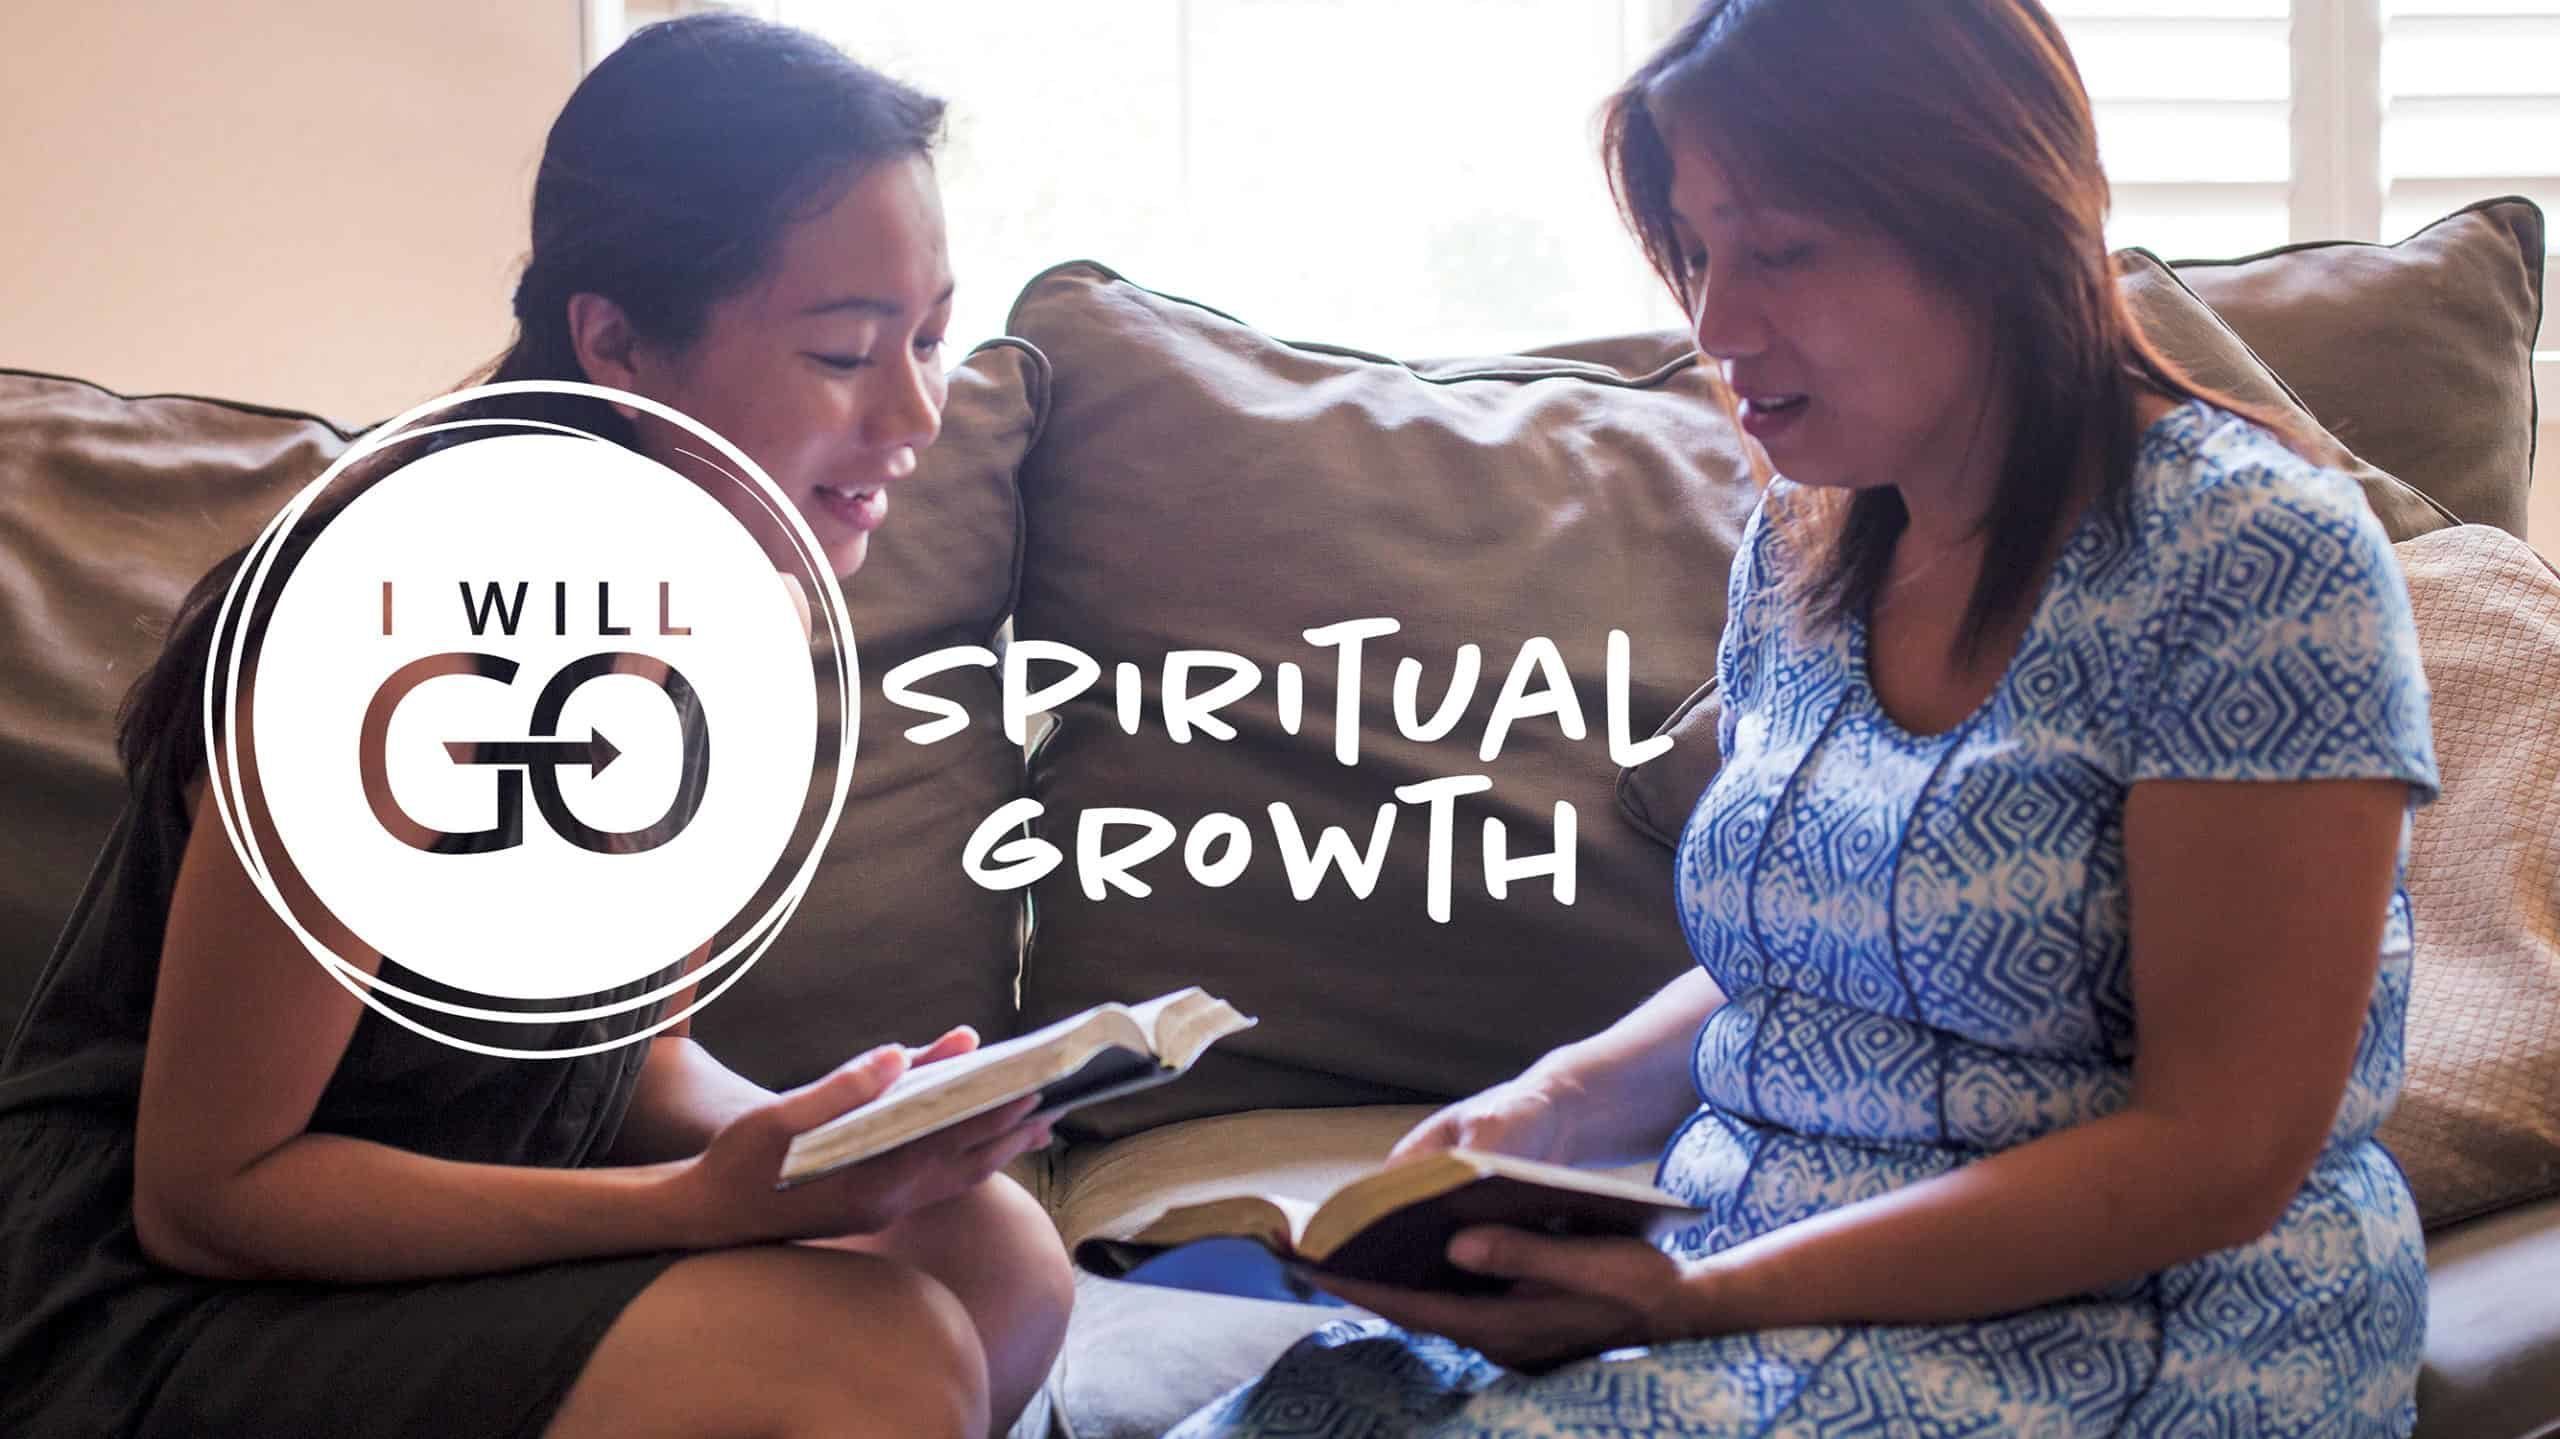 SpiritualGrowth-1-scaled